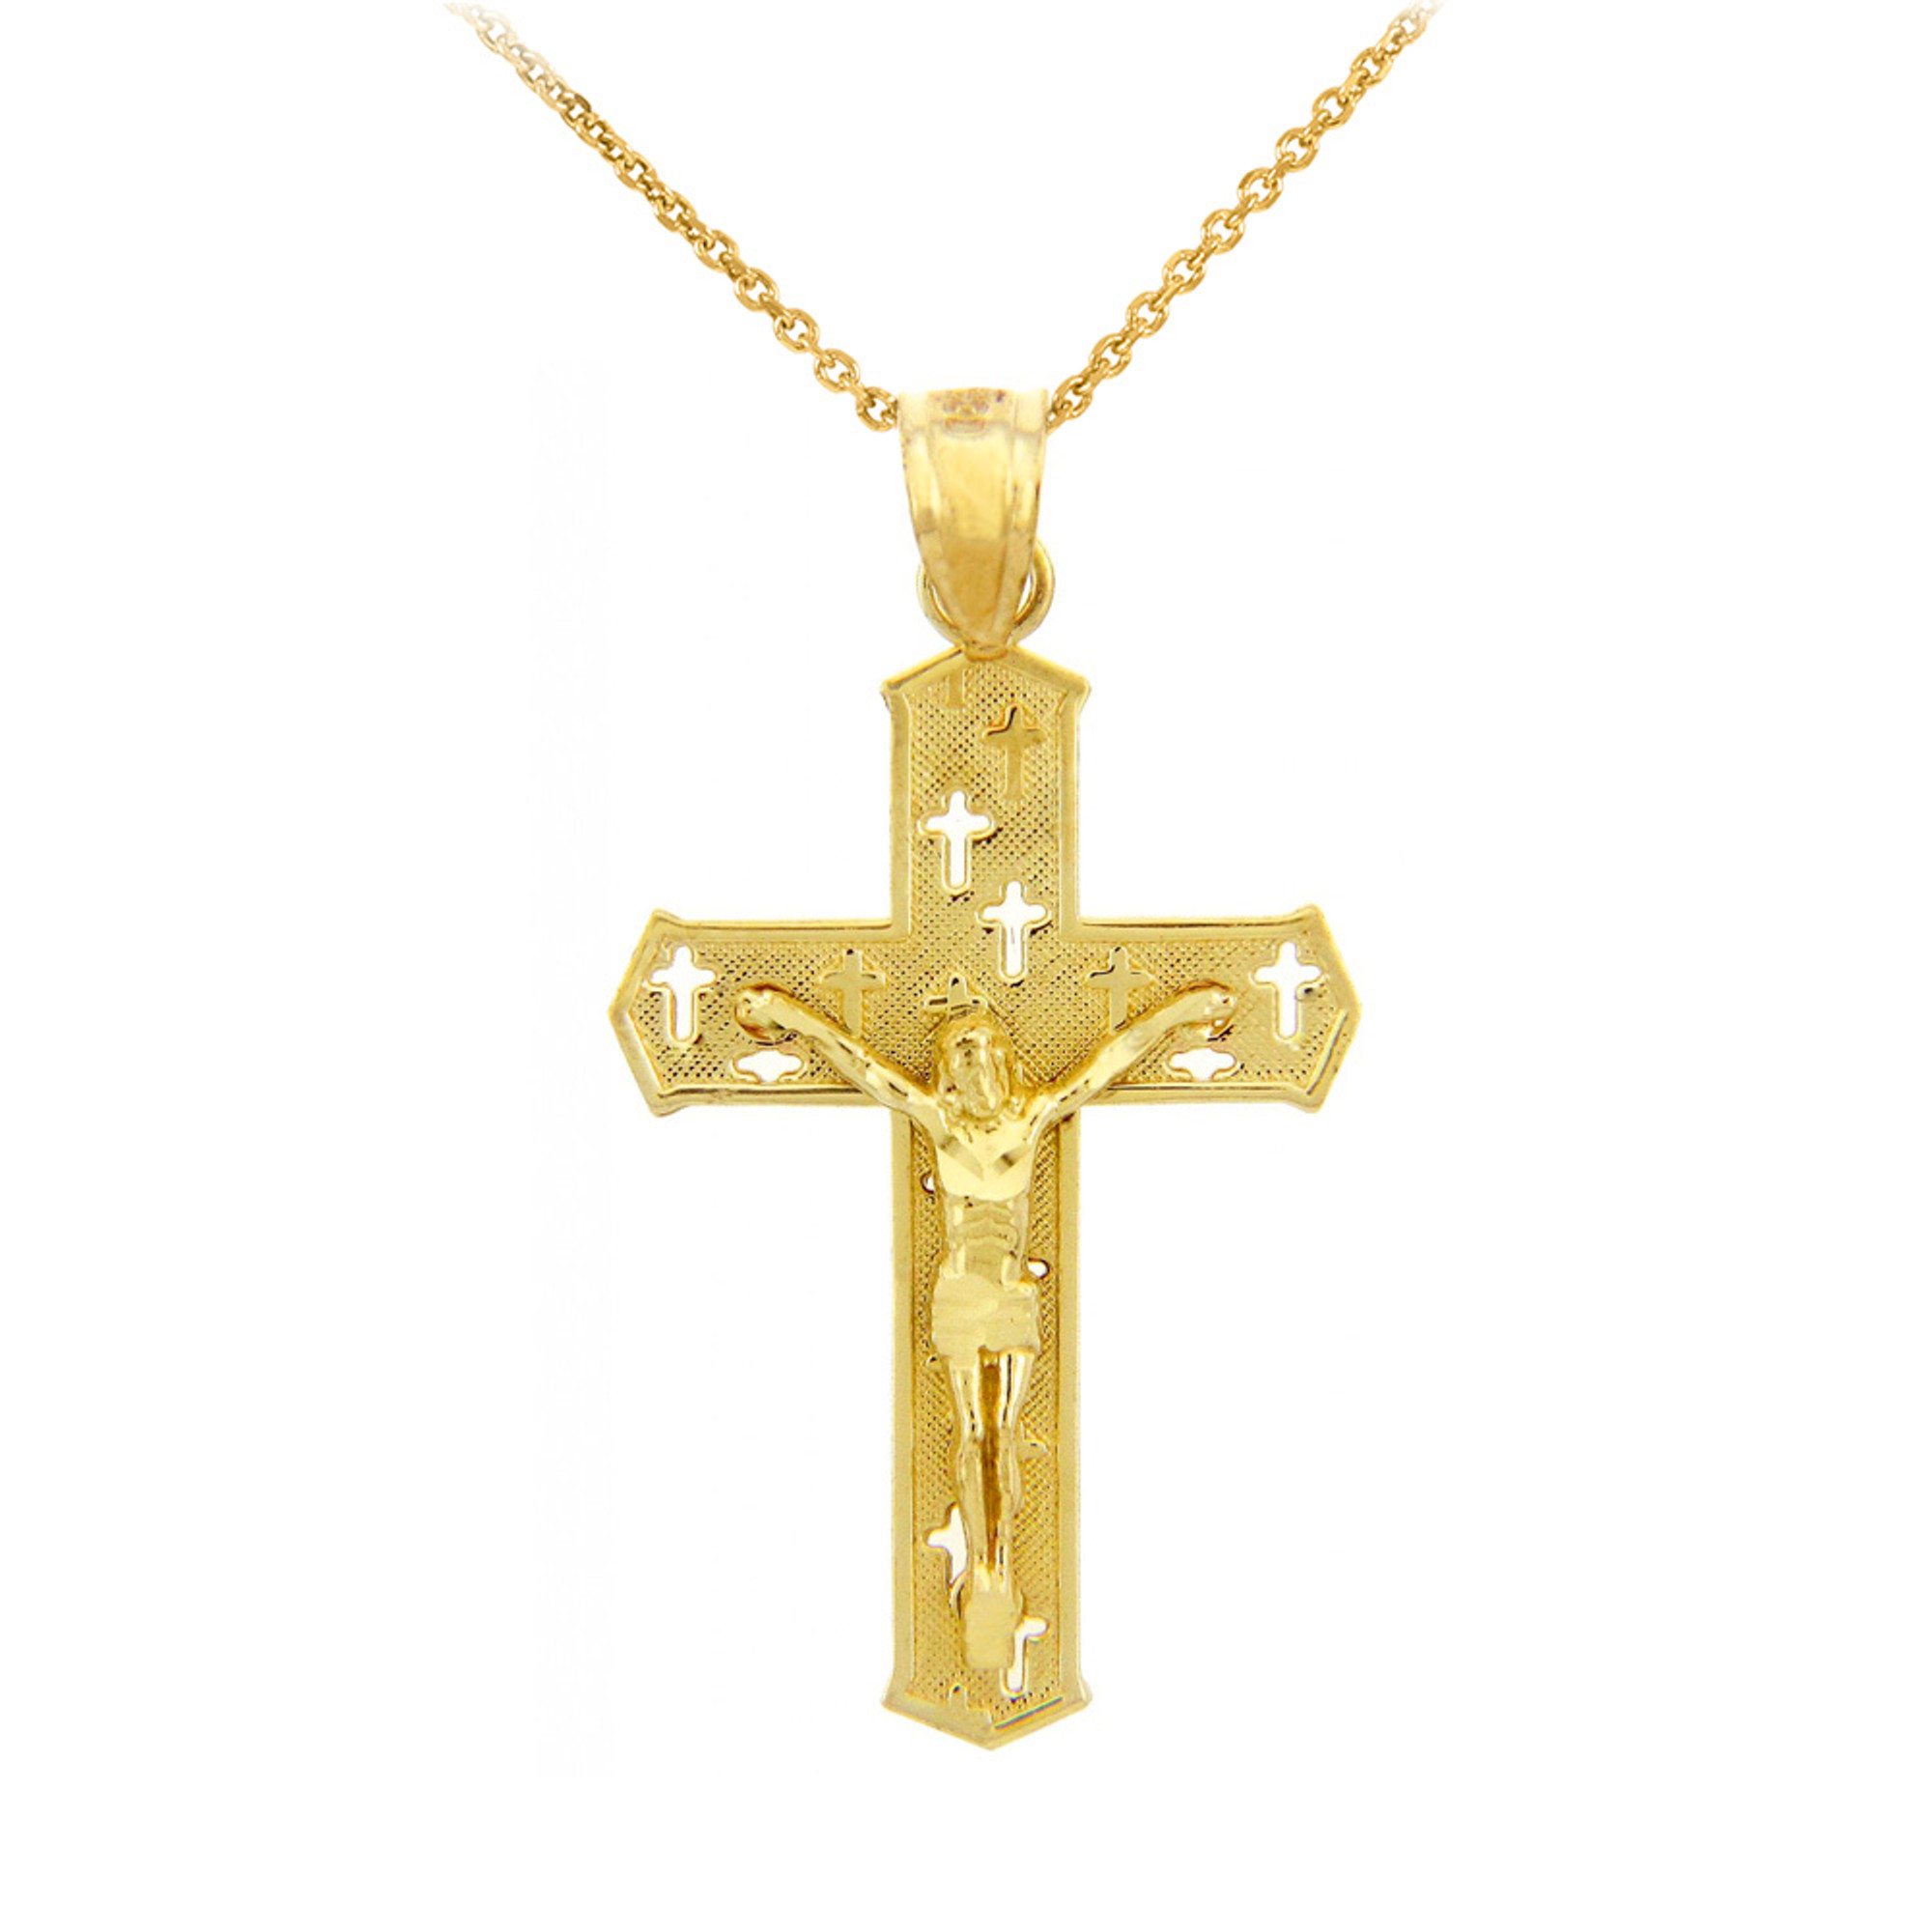 Yellow Gold Crucifix Pendant - The Crosses Crucifix